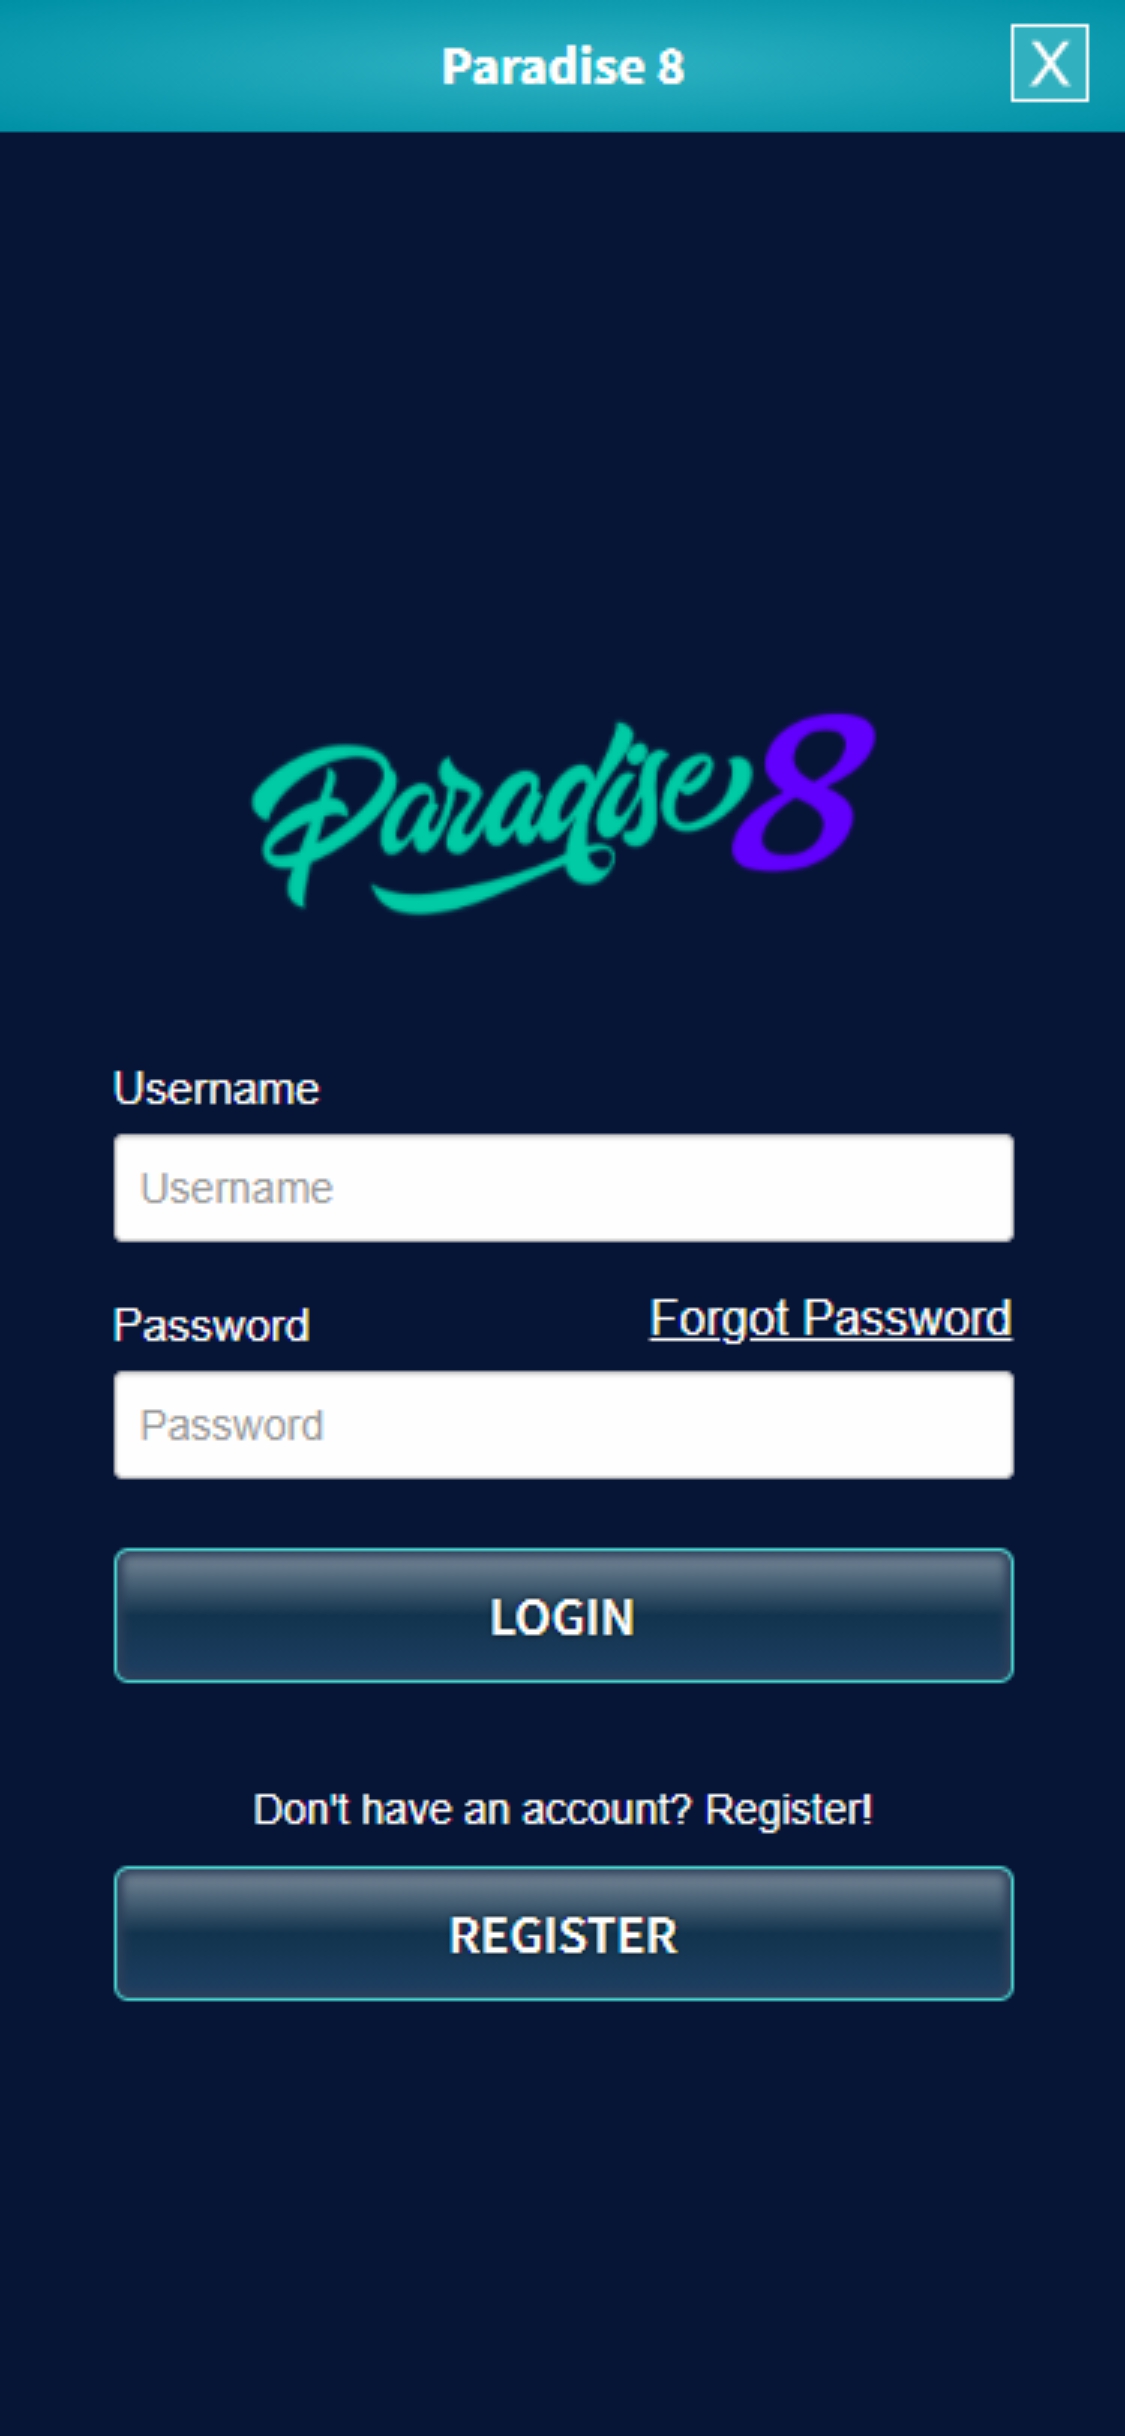 Paradise 8 Casino Mobile Login Review